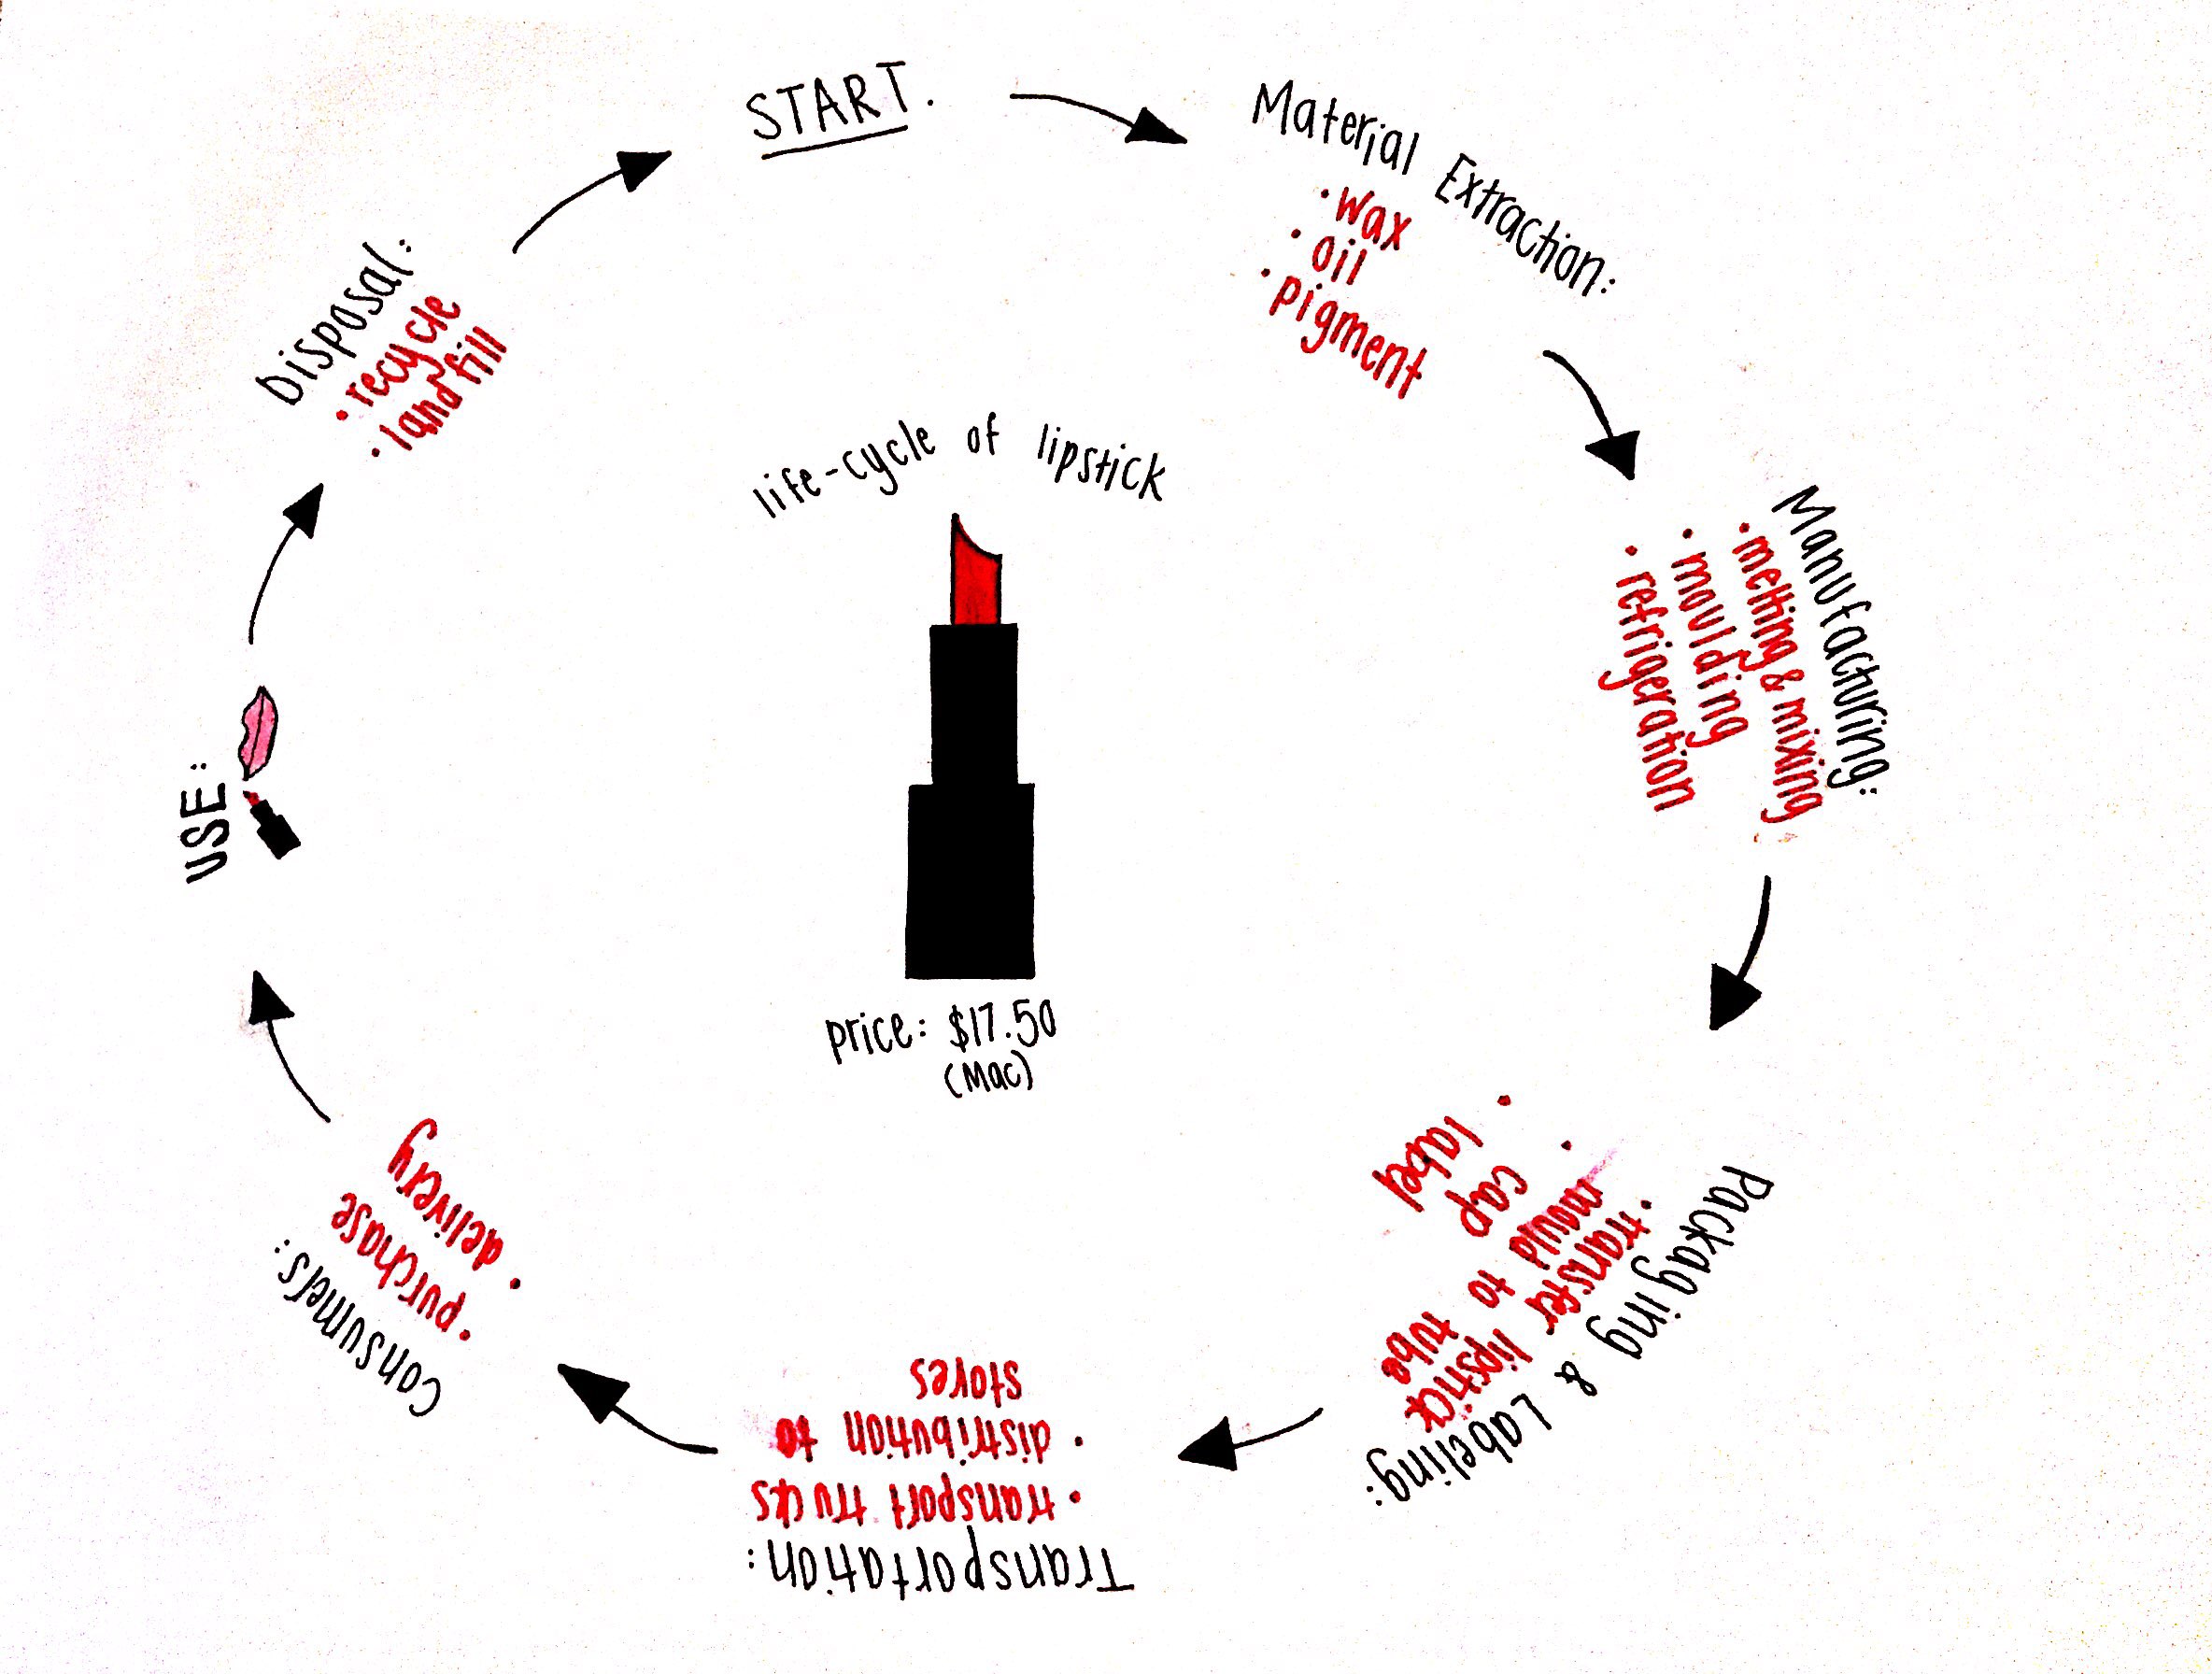 Life Cycle Diagram